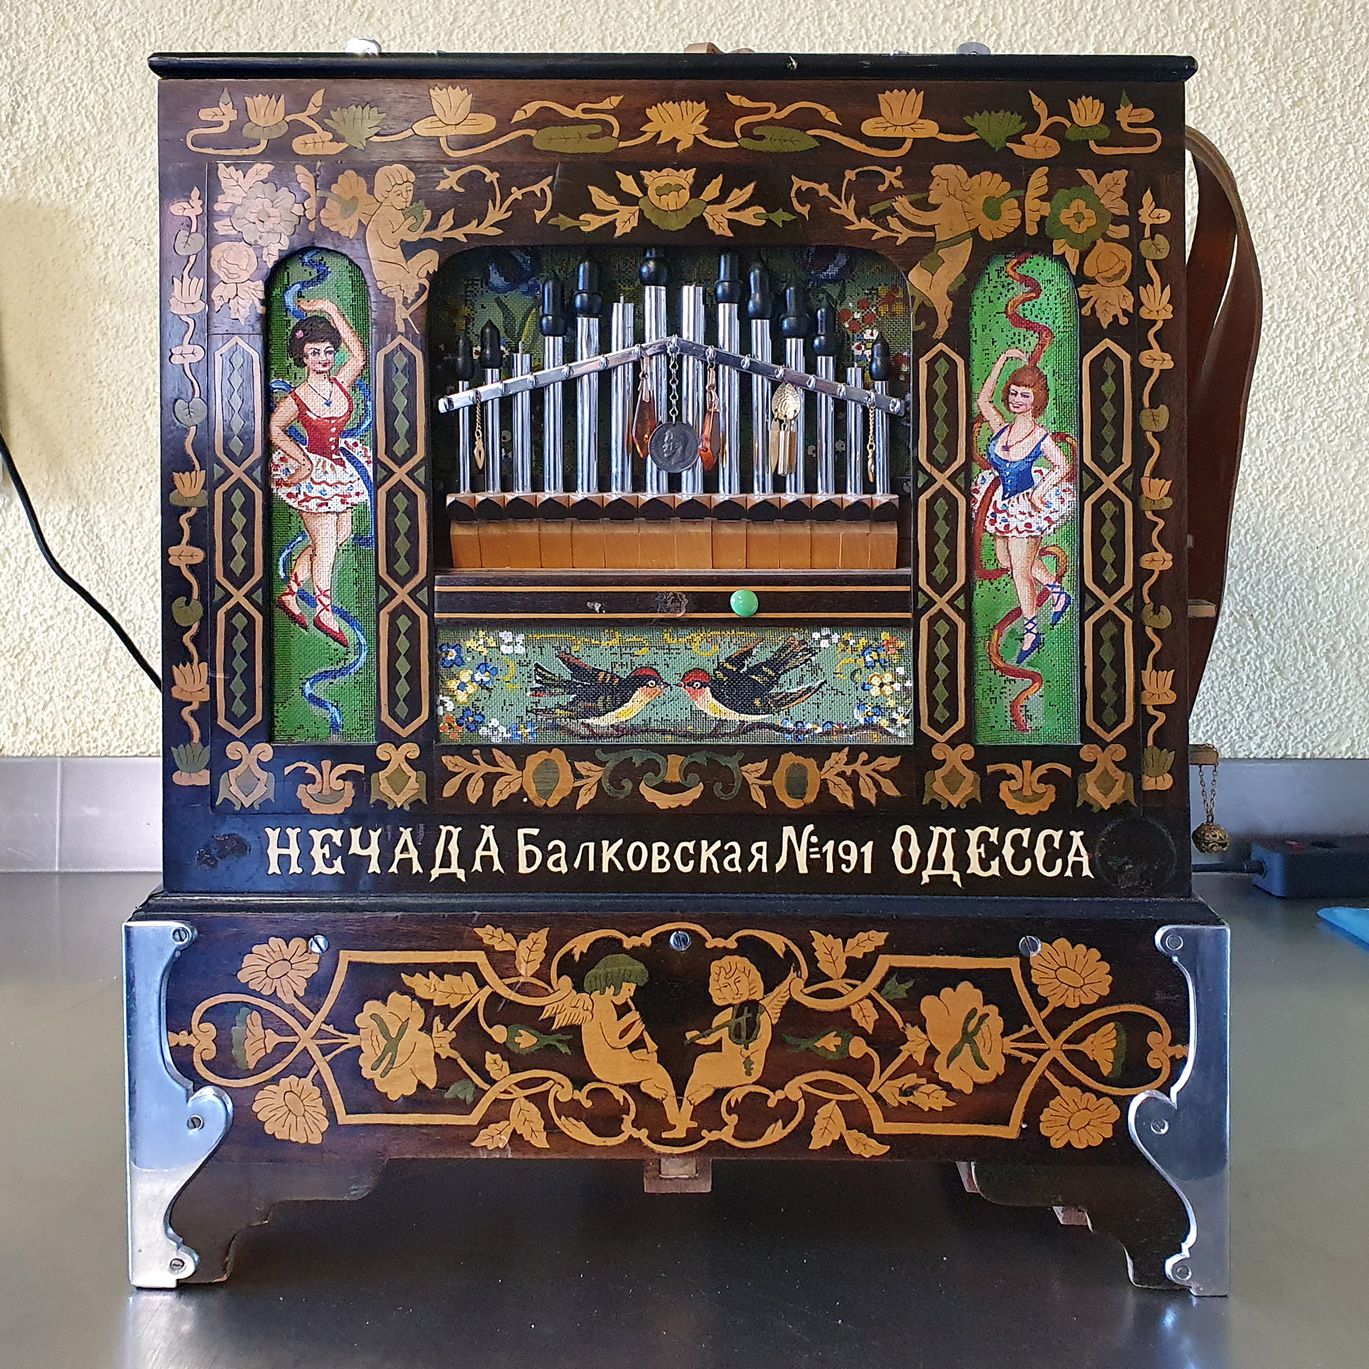 Street Organ from I.Nechada factory (Odessa) around 1910 
A wonderful organ from&hellip;